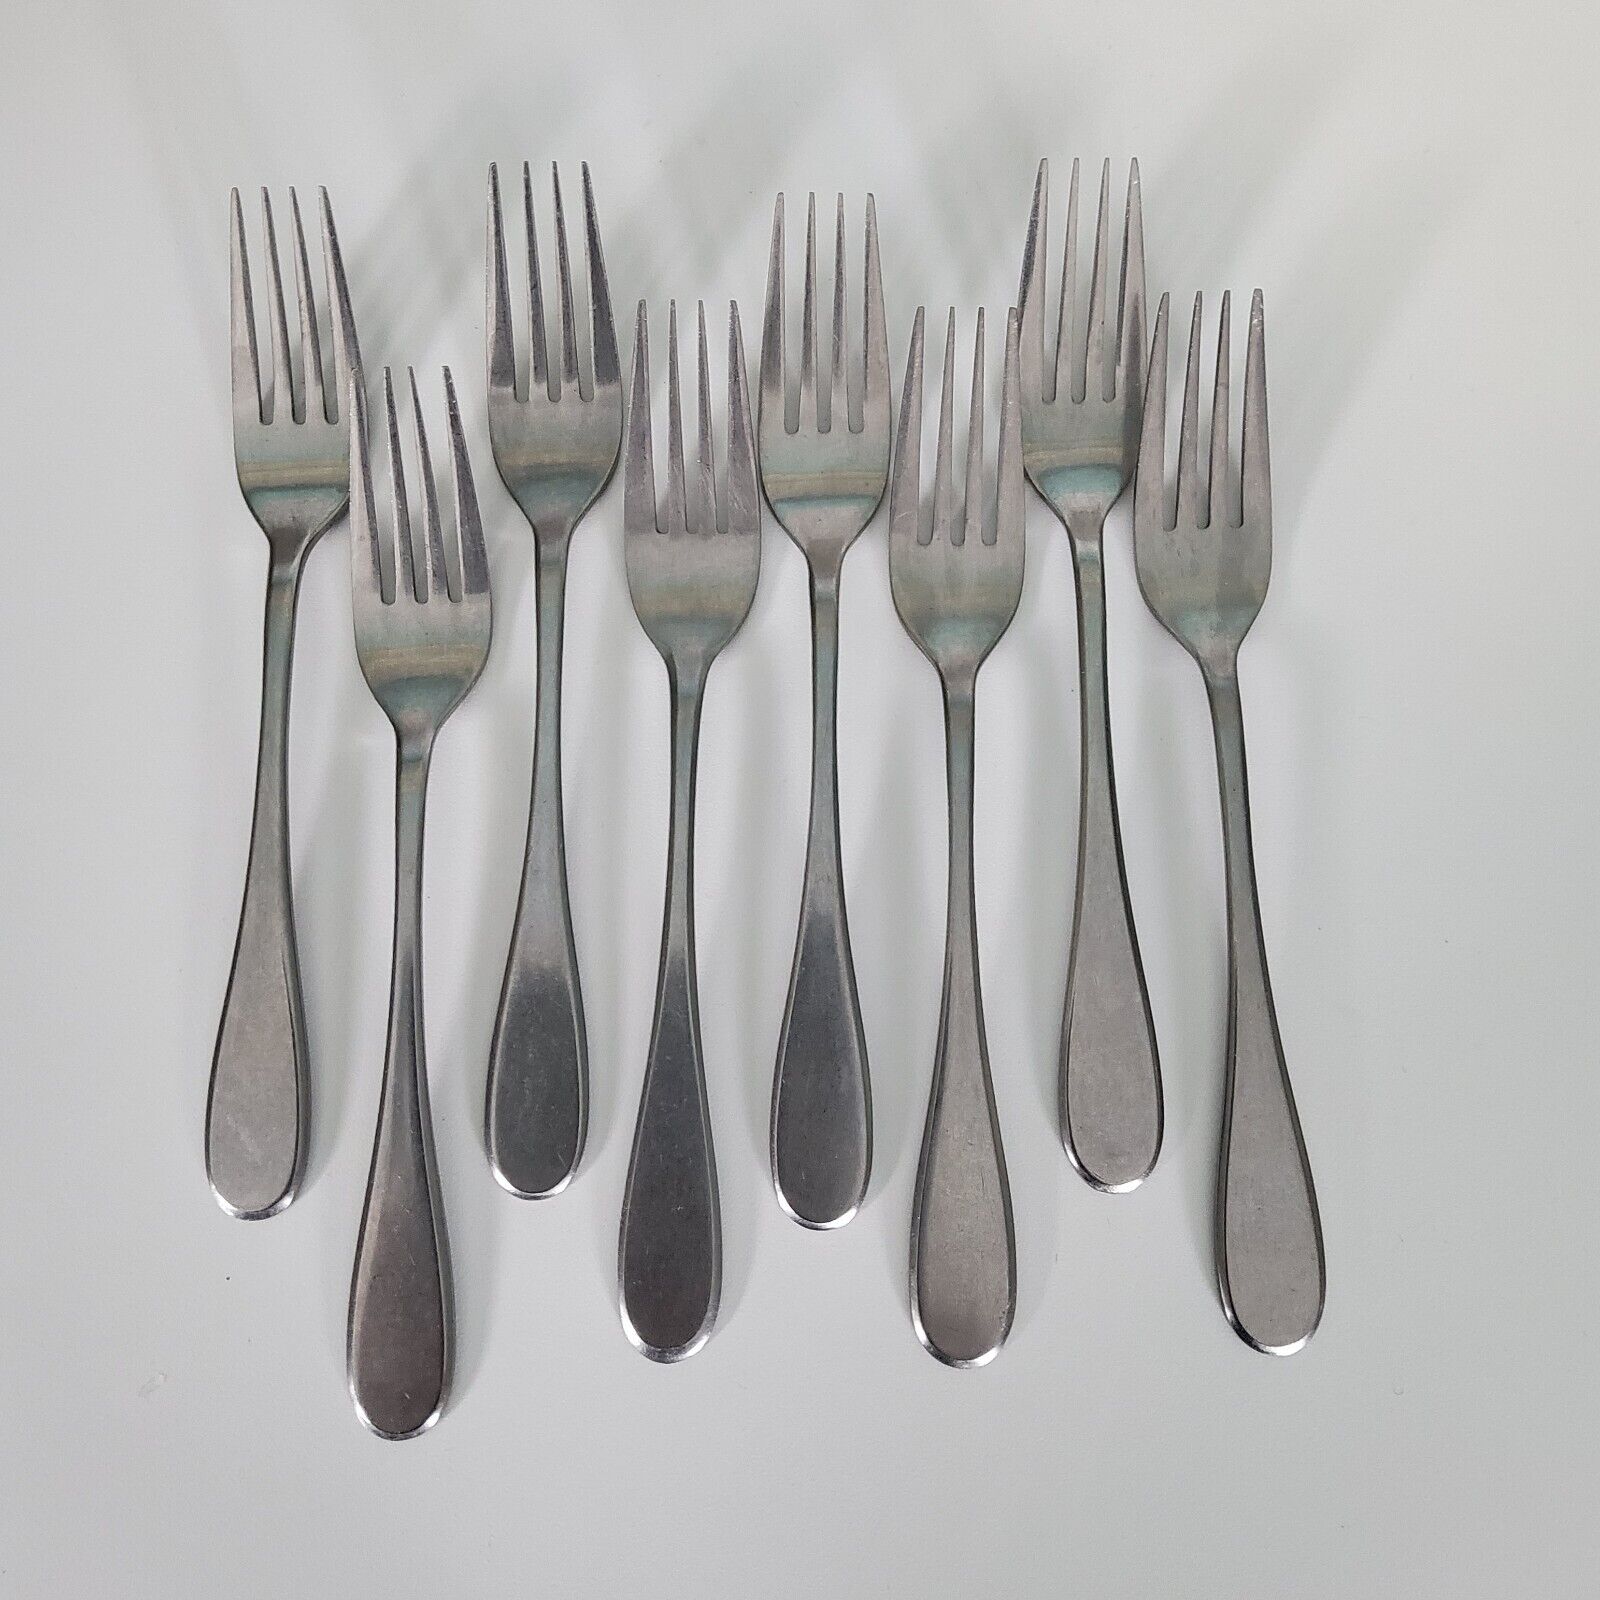 Vintage Edward Don Company Pattern Don Stainless Dinner Forks set of 8